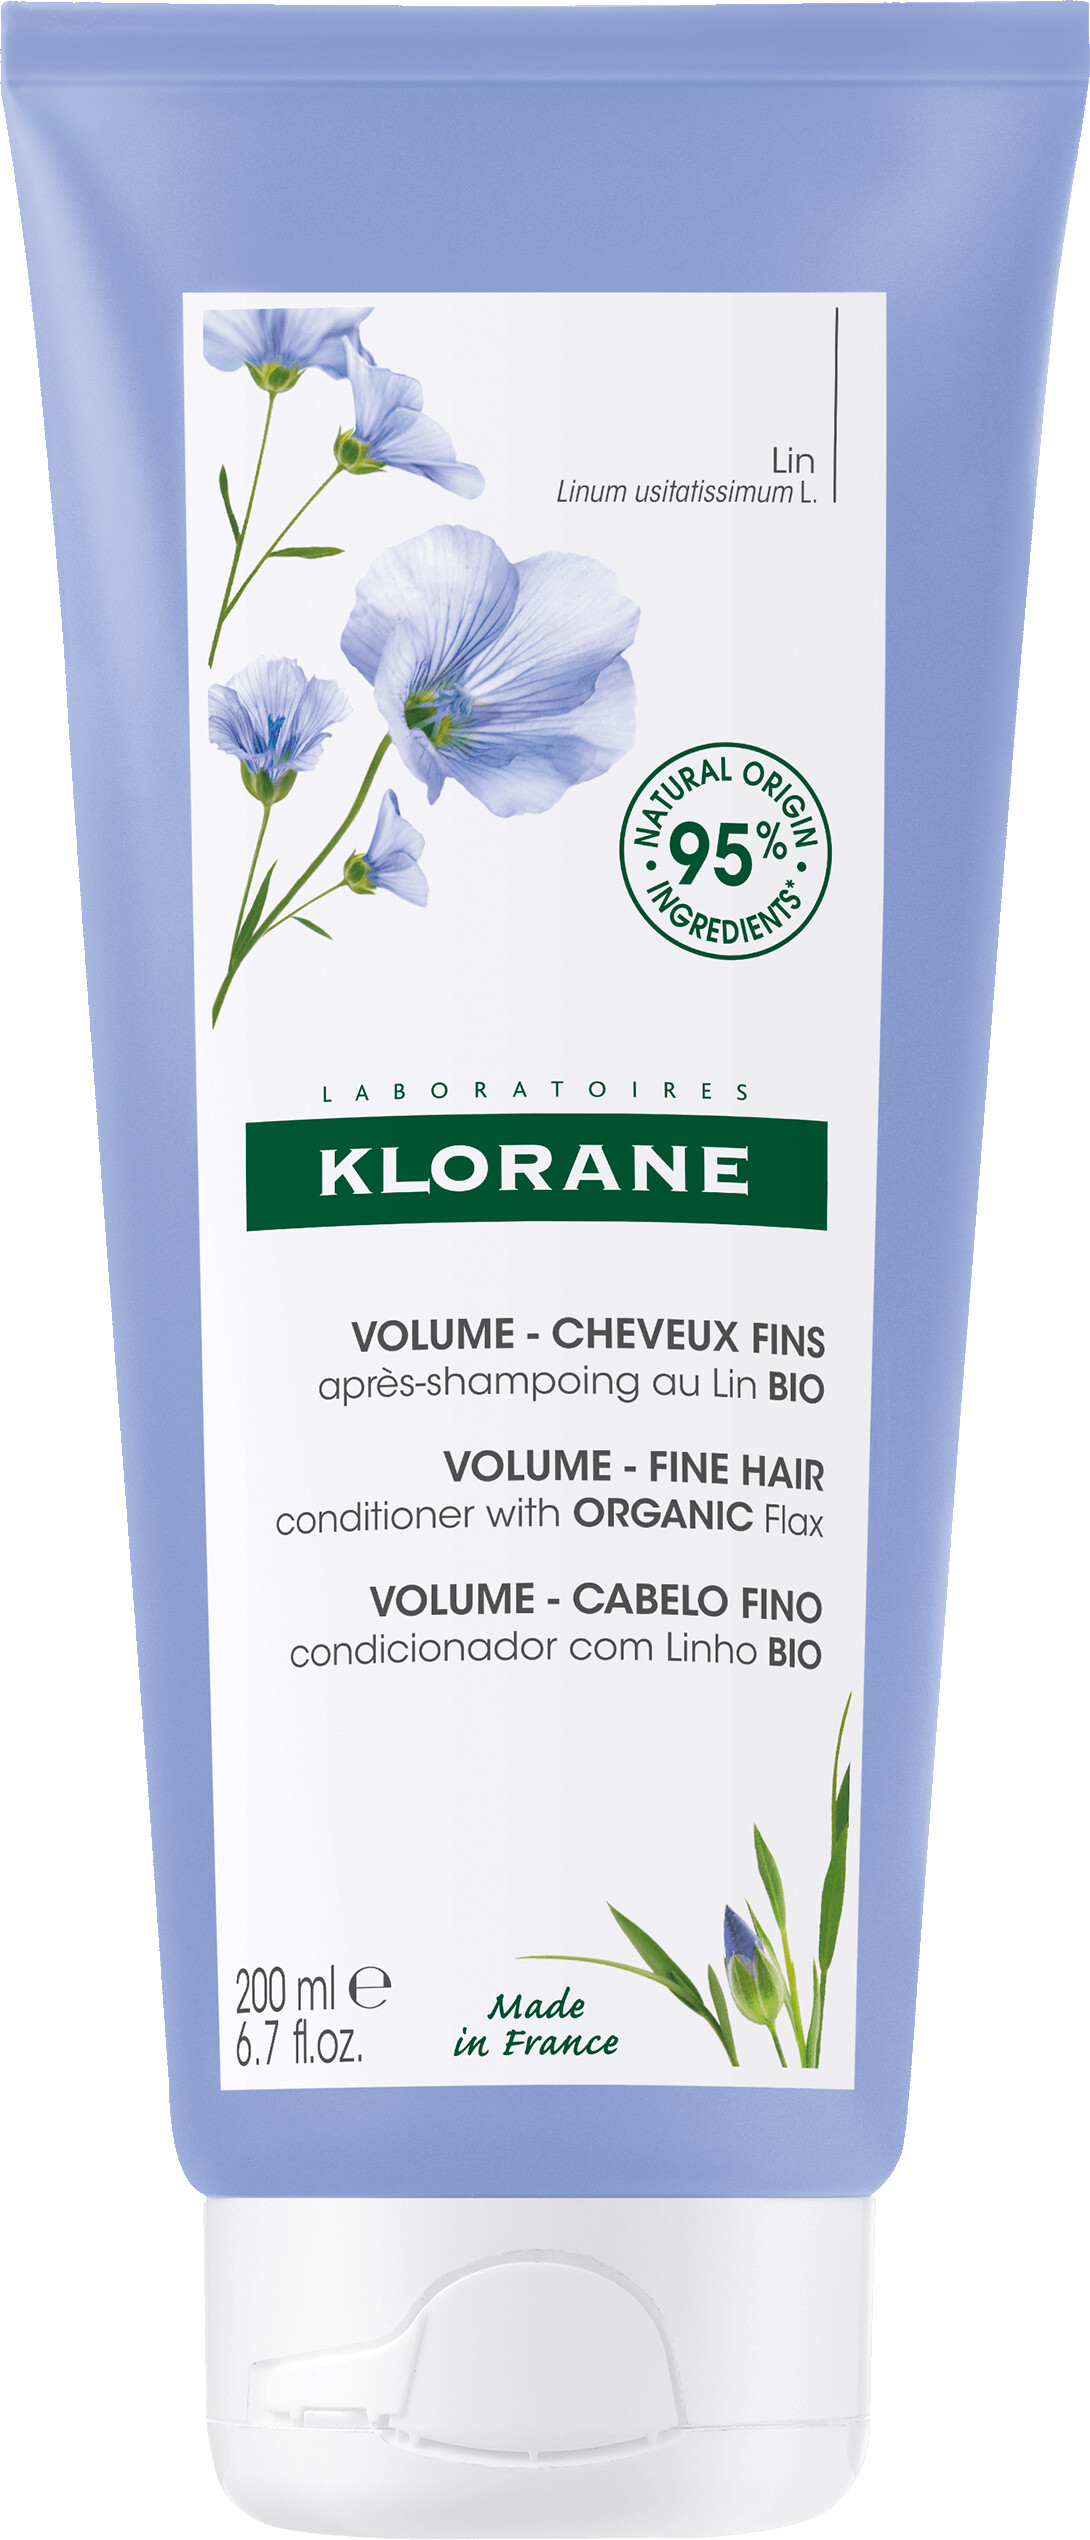 Klorane Flax Fiber Volume Conditioner for Fine Hair 200ml